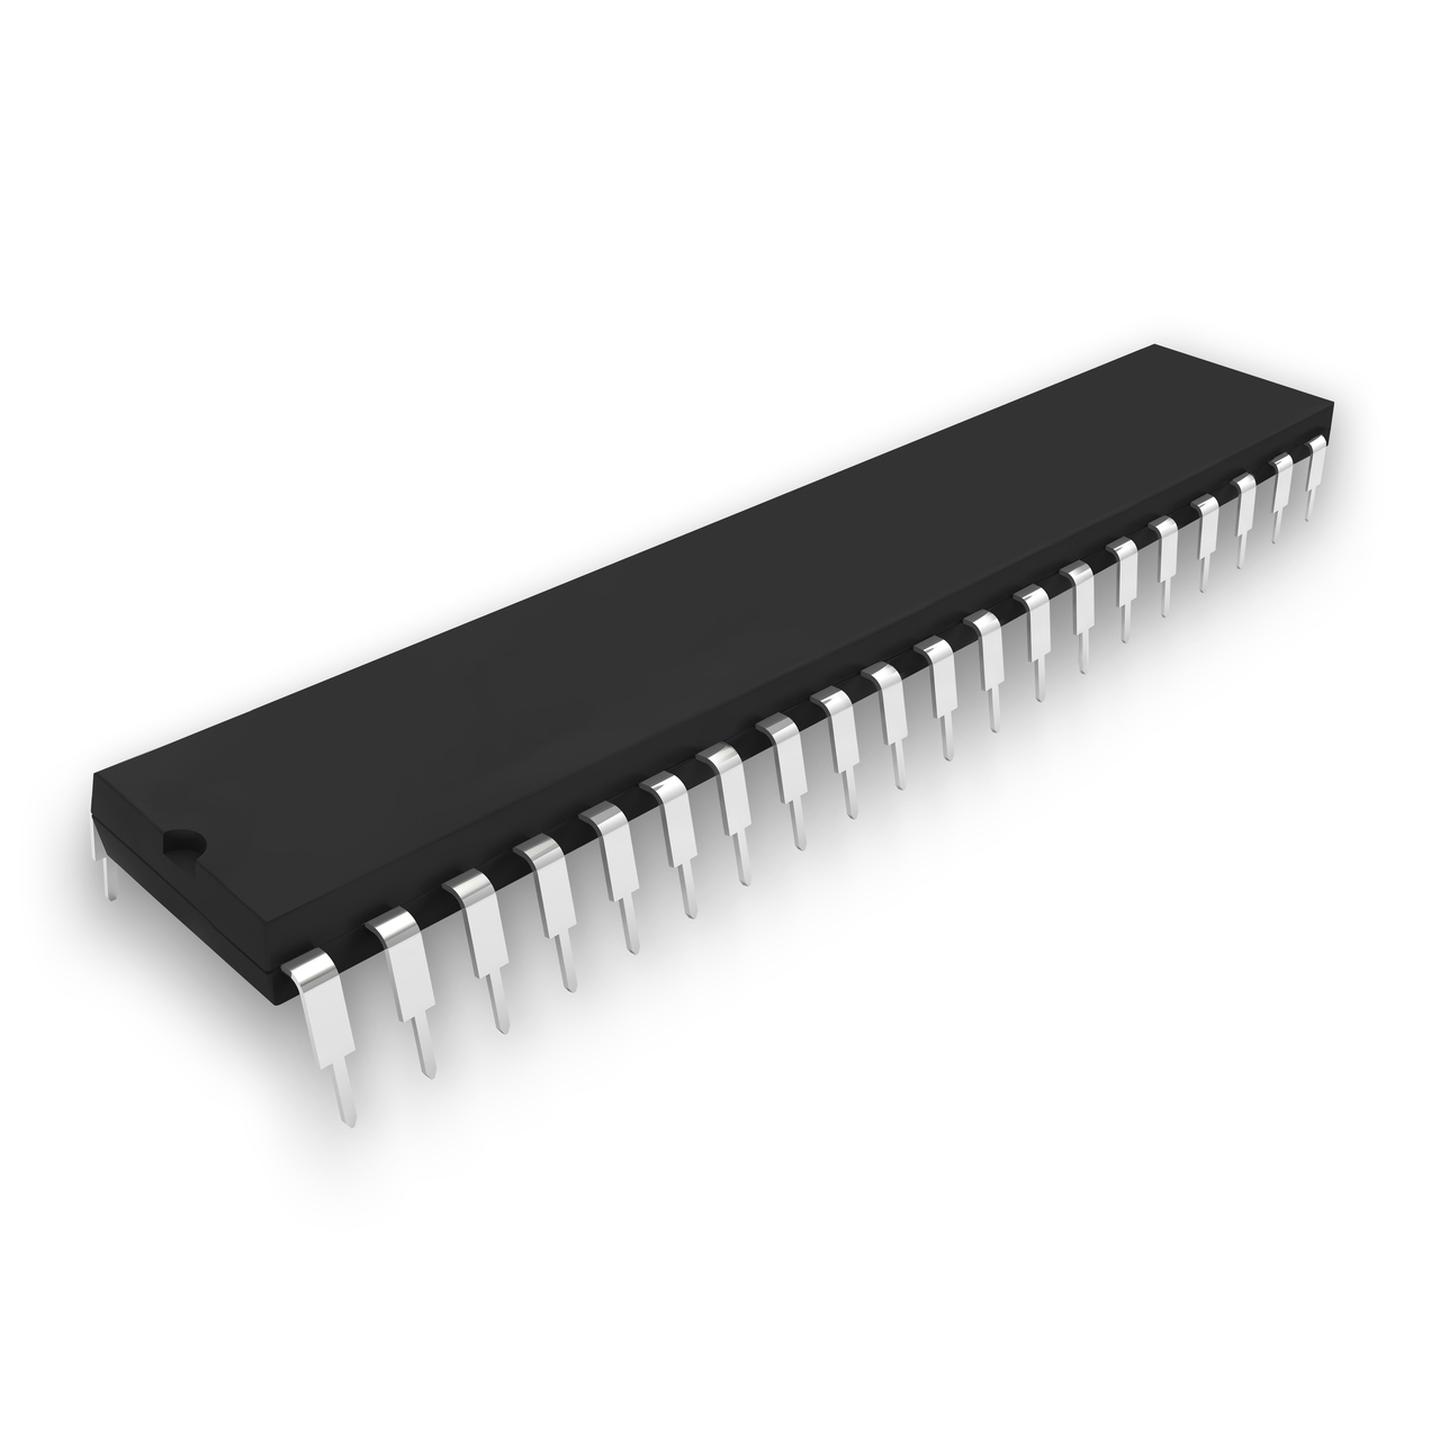 PIC16F877A-I/P 8-Bit Microcontroller